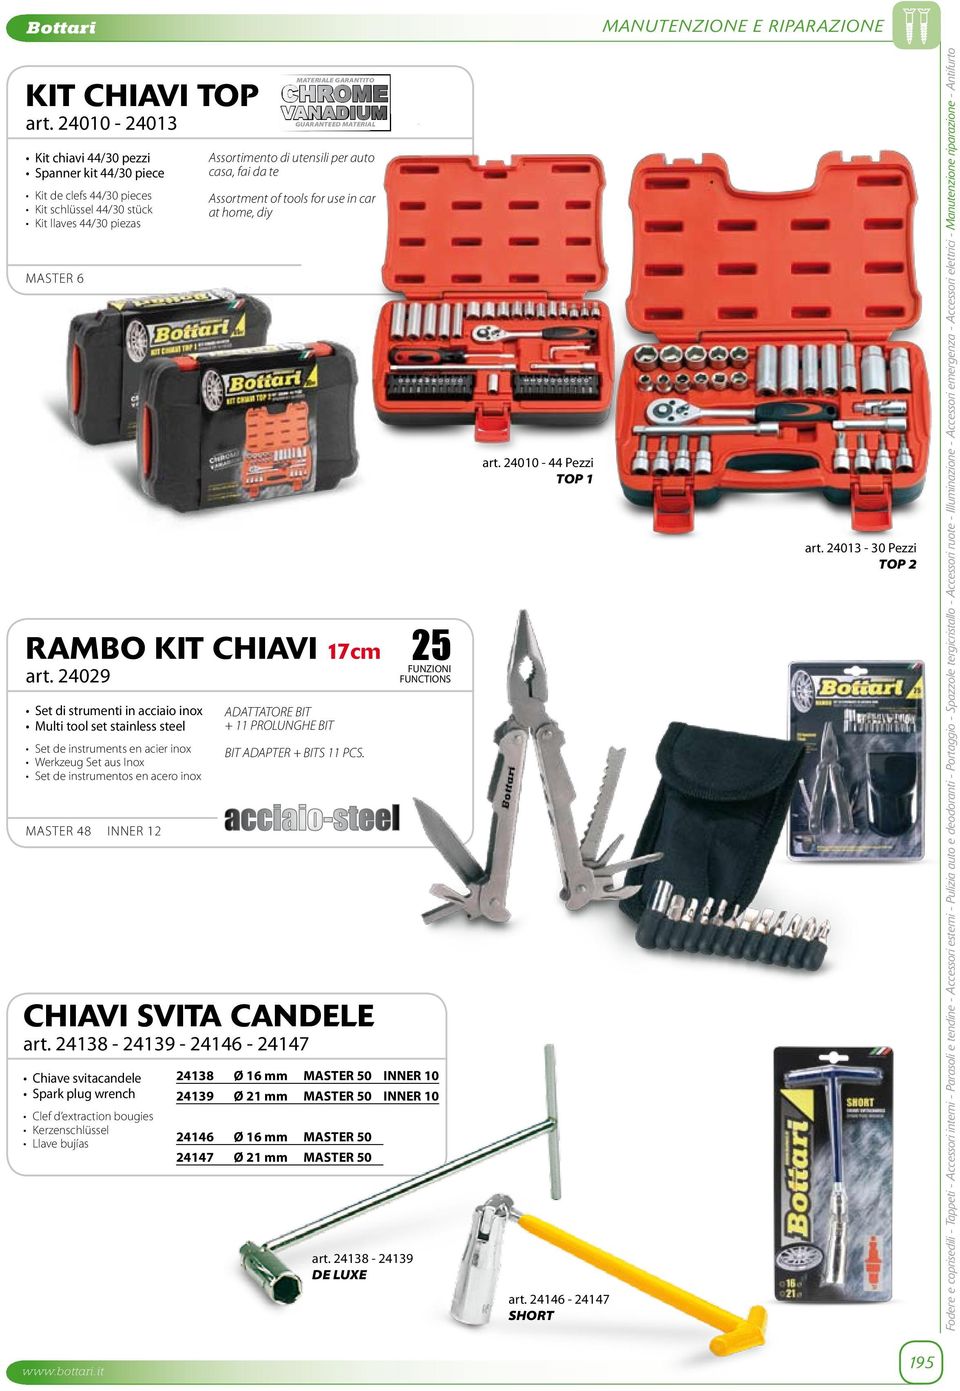 Assortimento di utensili per auto casa, fai da te Assortment of tools for use in car at home, diy RAMBO KIT CHIAVI 17cm art.